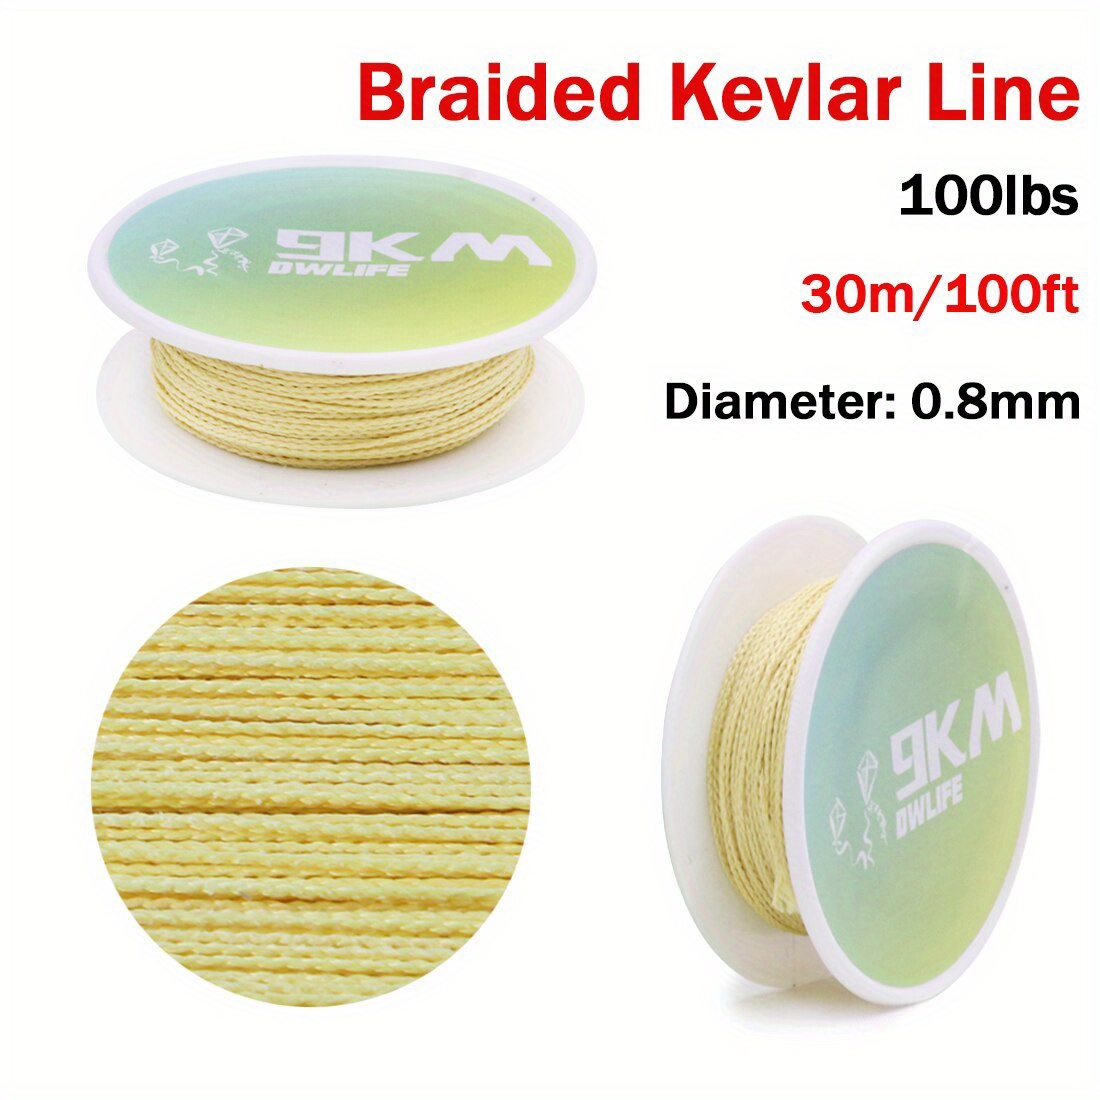 9KM DWLIFE Braided Kevlar Cord, 100lb 0.8mm  